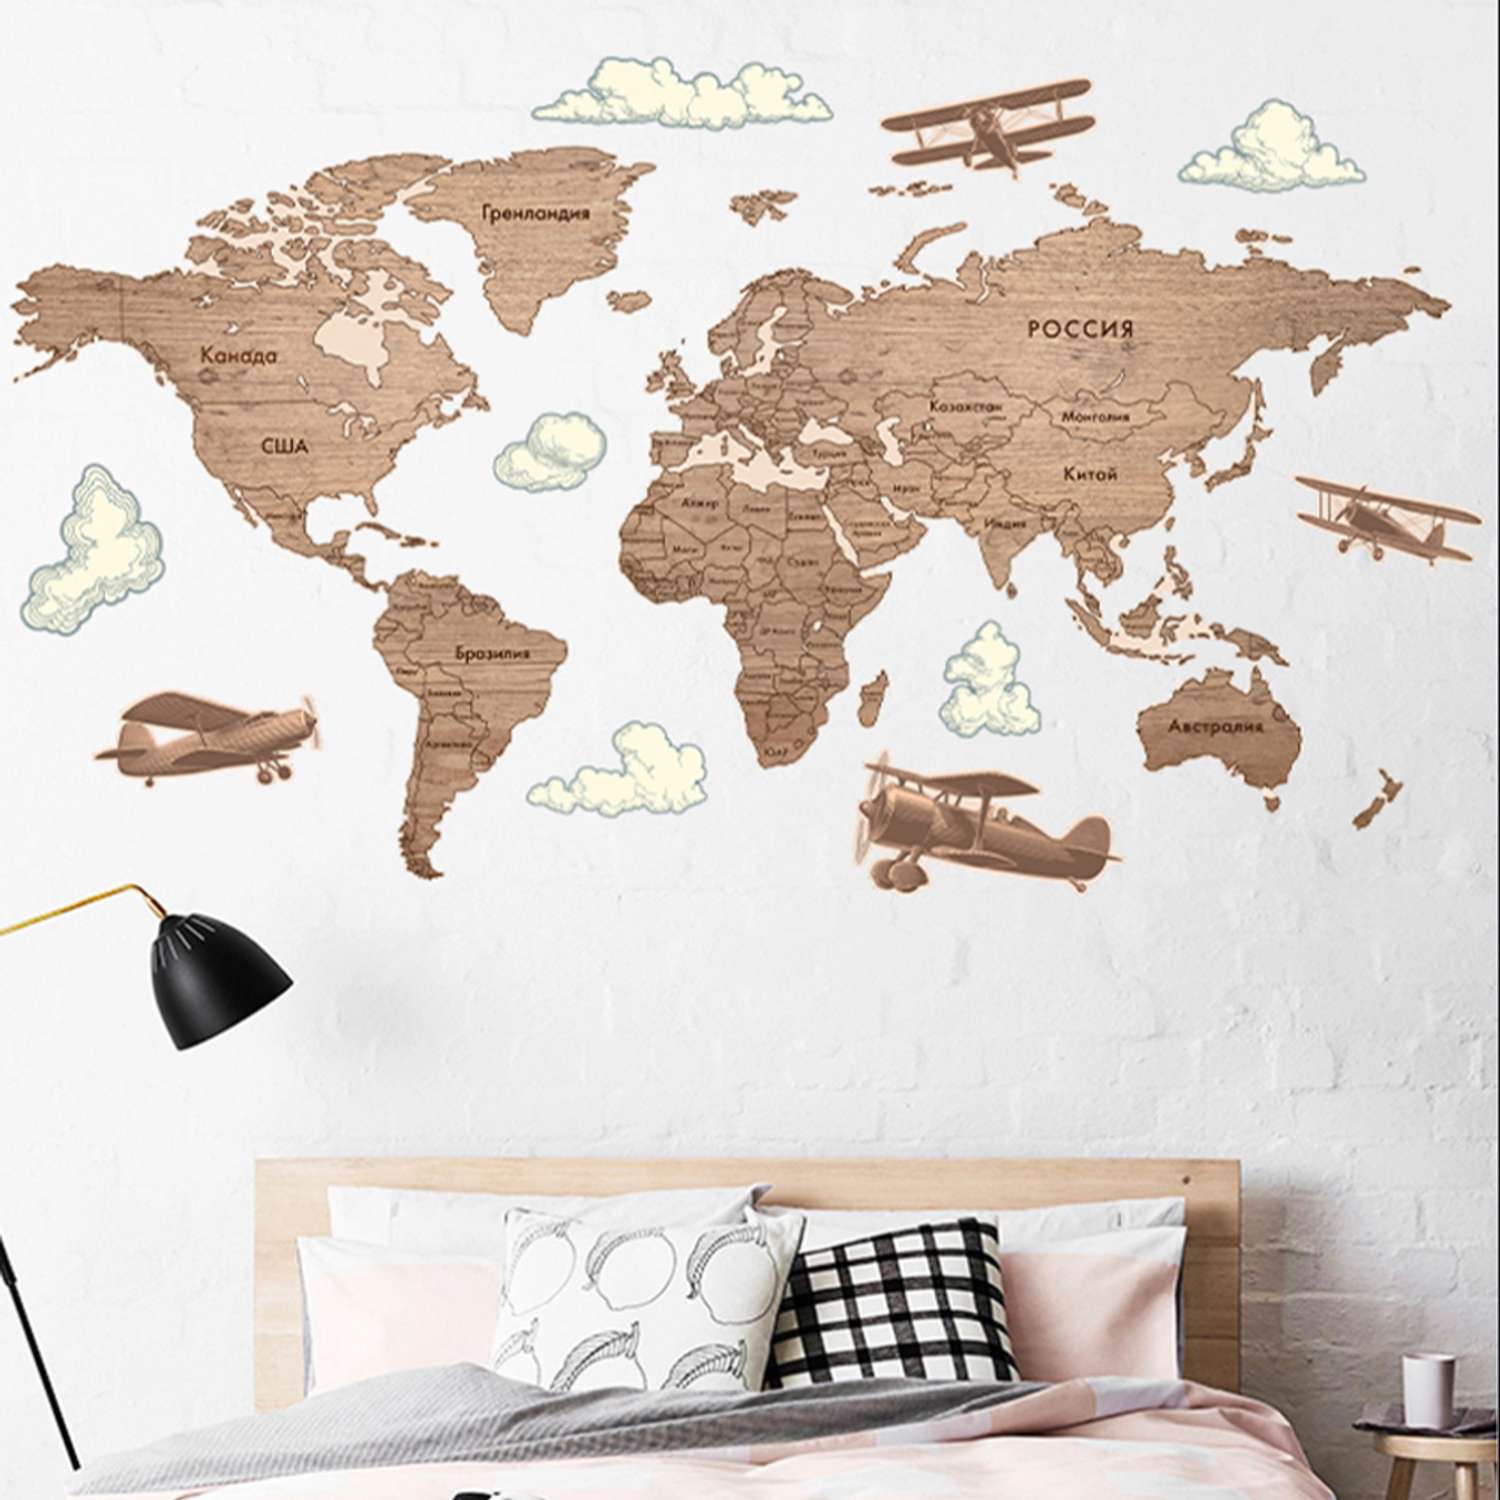 Наклейка интерьерная Woozzee Карта мира под дерево - фото 1